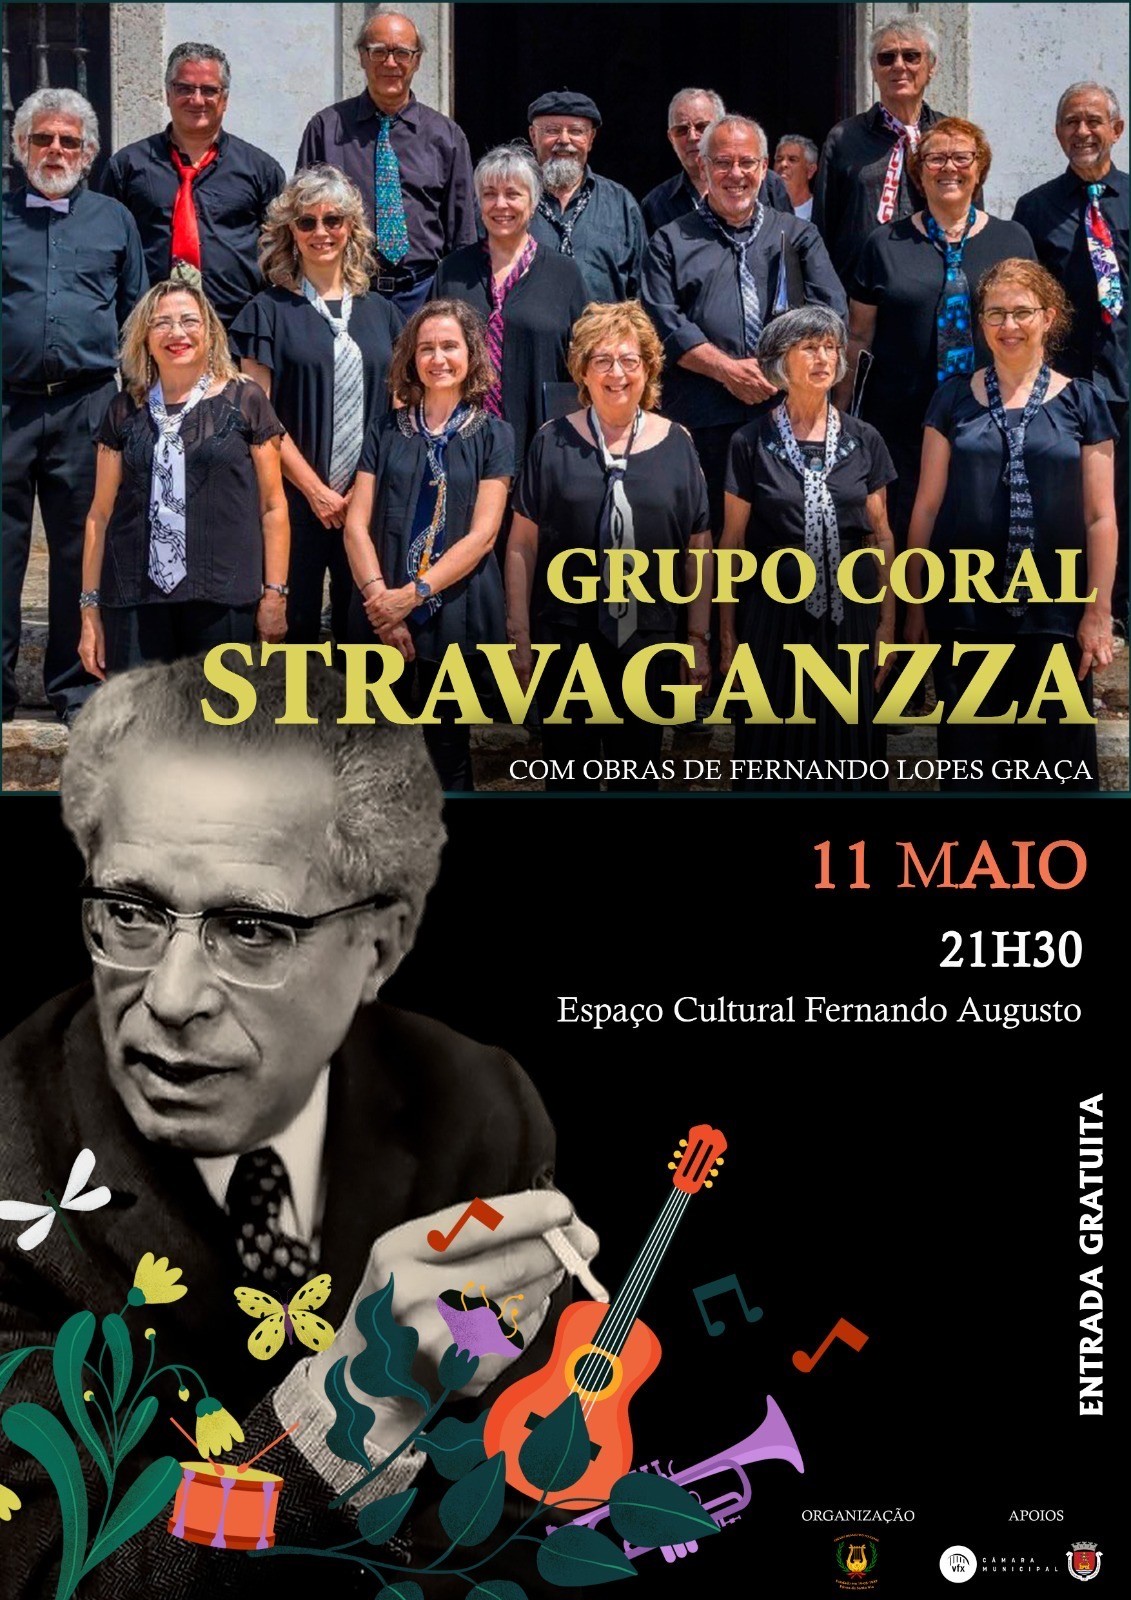 Concerto com o Grupo Coral Stravaganzza